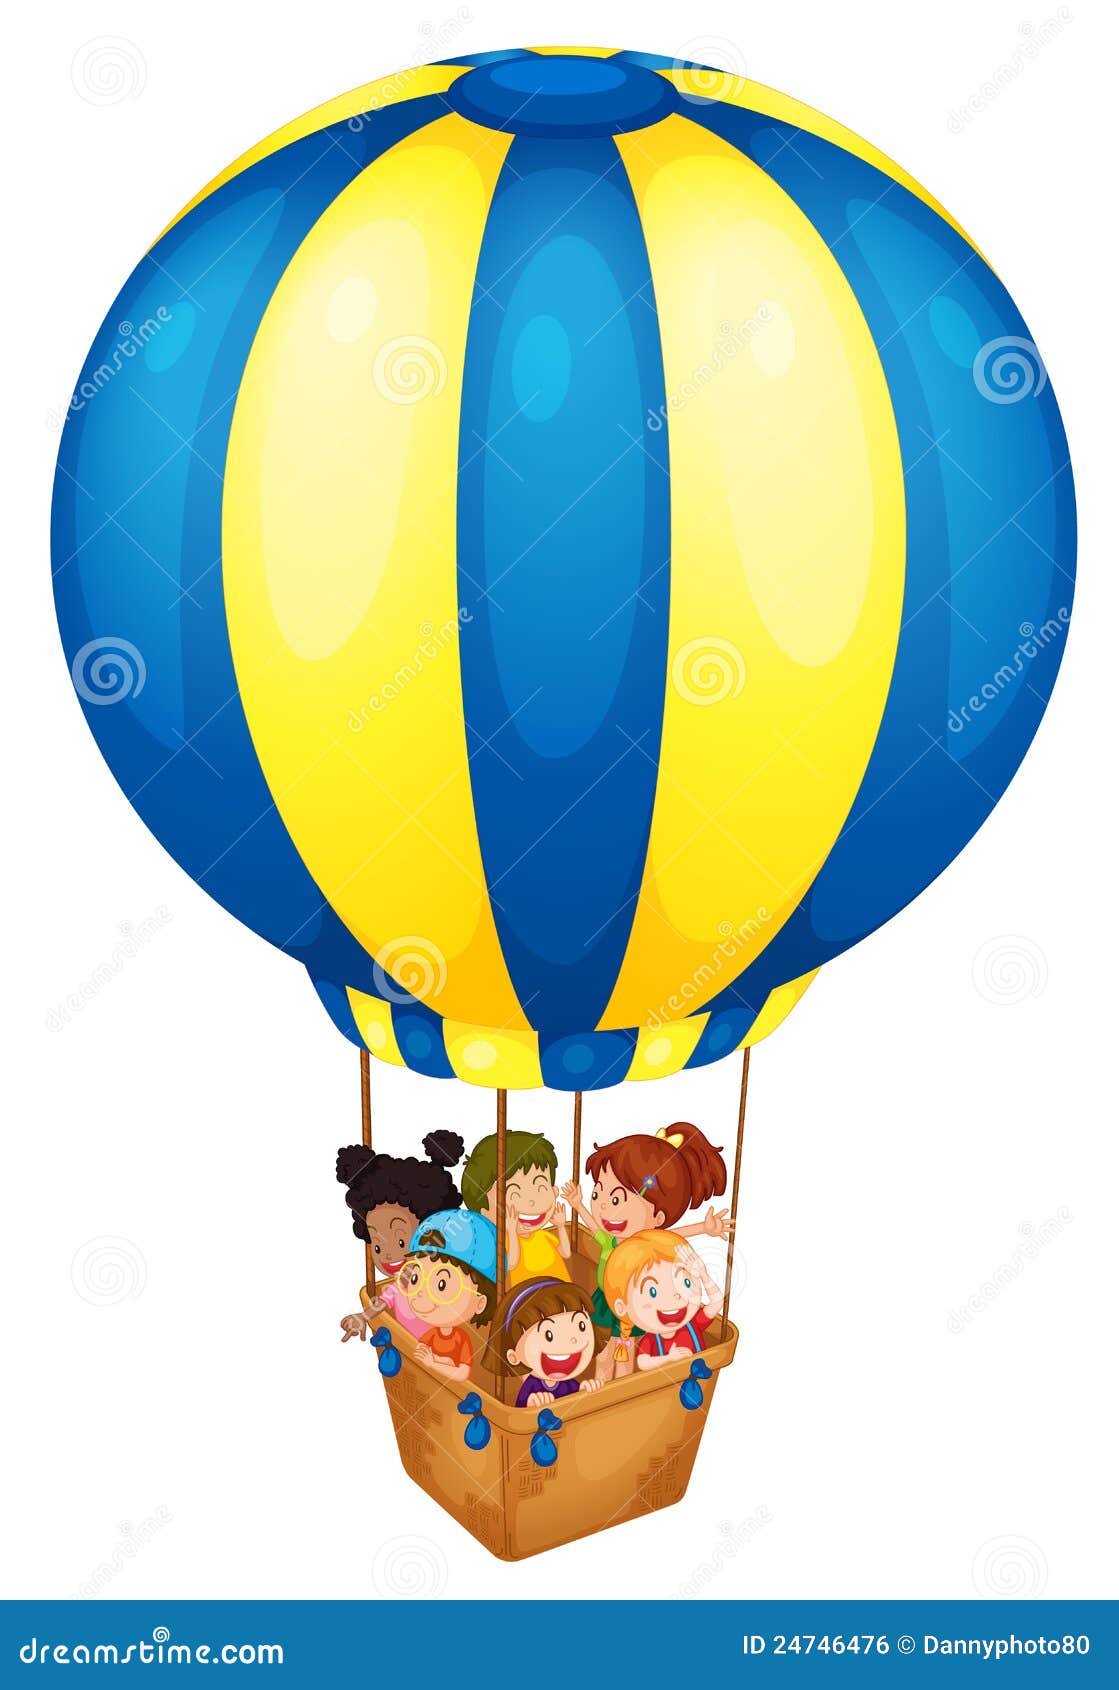 Коротышки воздушный шар. Воздушный шар с корзиной. Воздушный шар с корзинкой для детей. Воздушный шар с корзиной мультяшный. Воздушный шар в ДОУ.